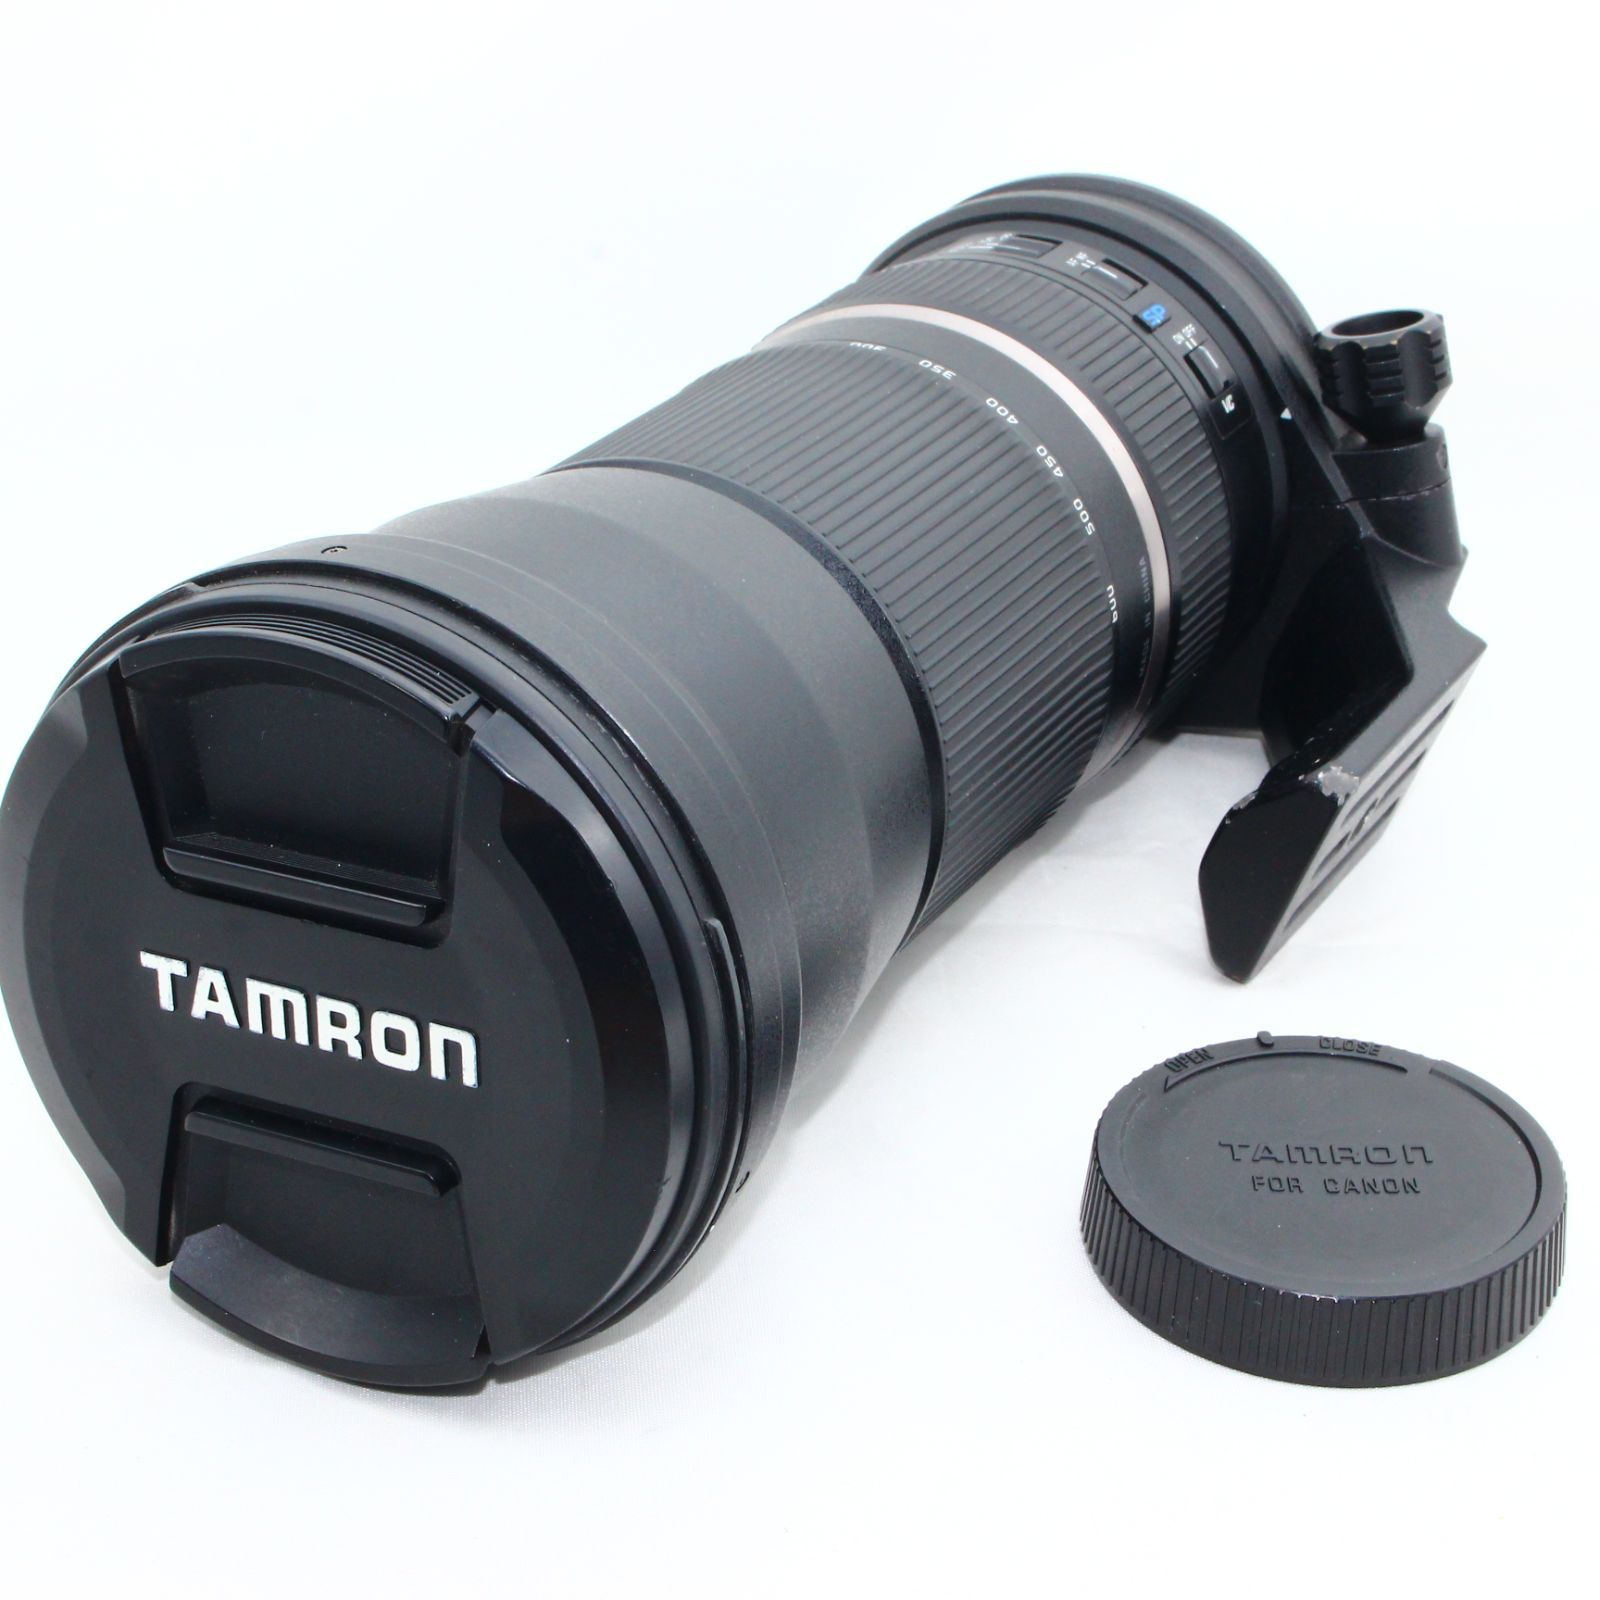 TAMRON 超望遠ズームレンズ SP 150-600mm F5-6.3 Di VC USD キヤノン用 ...